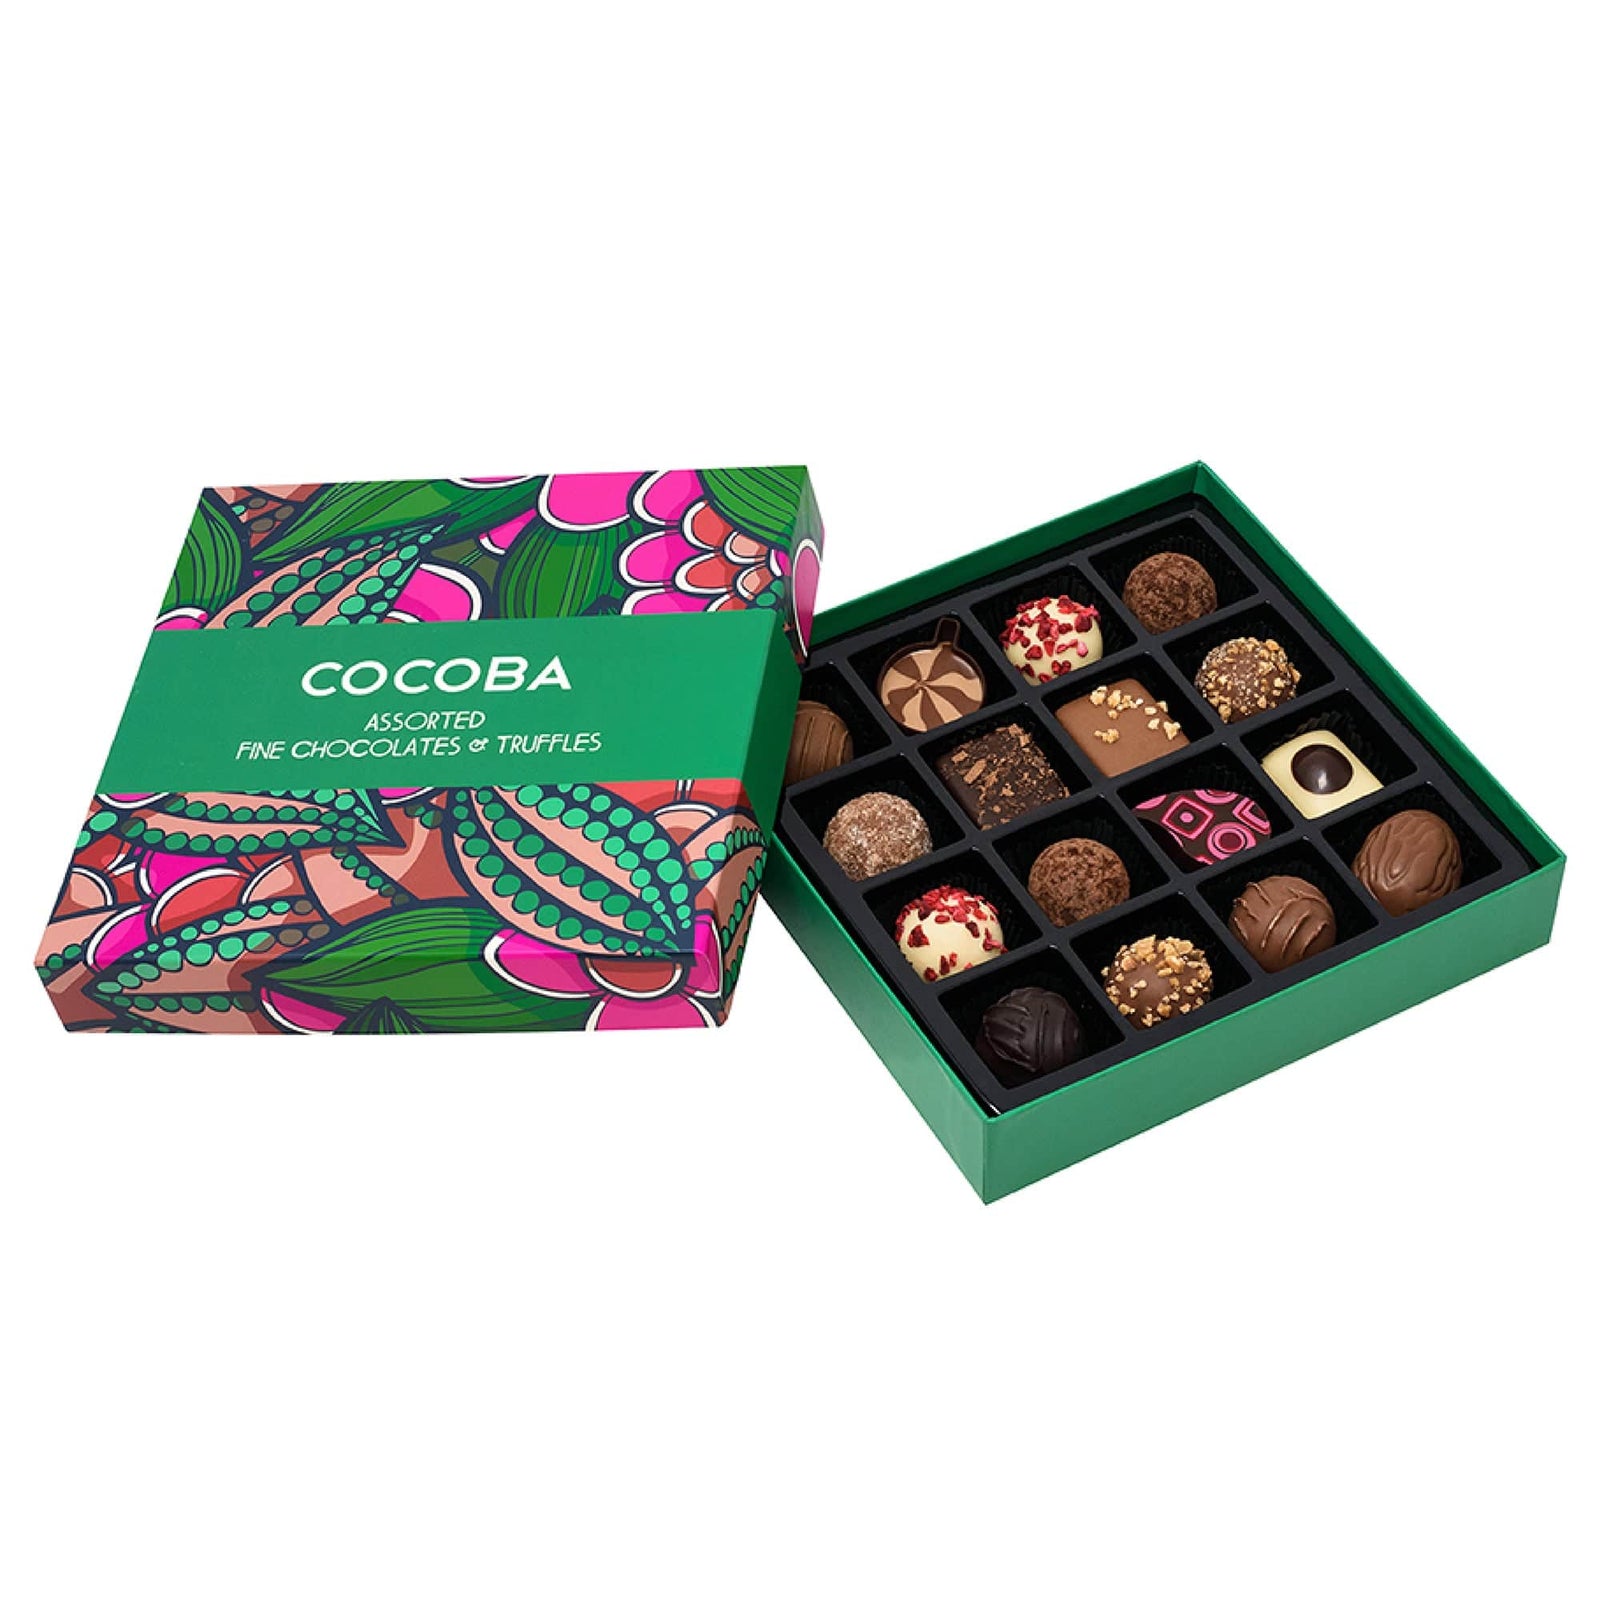 Cocoba Assorted Fine Chocolates & Truffles Gift Box